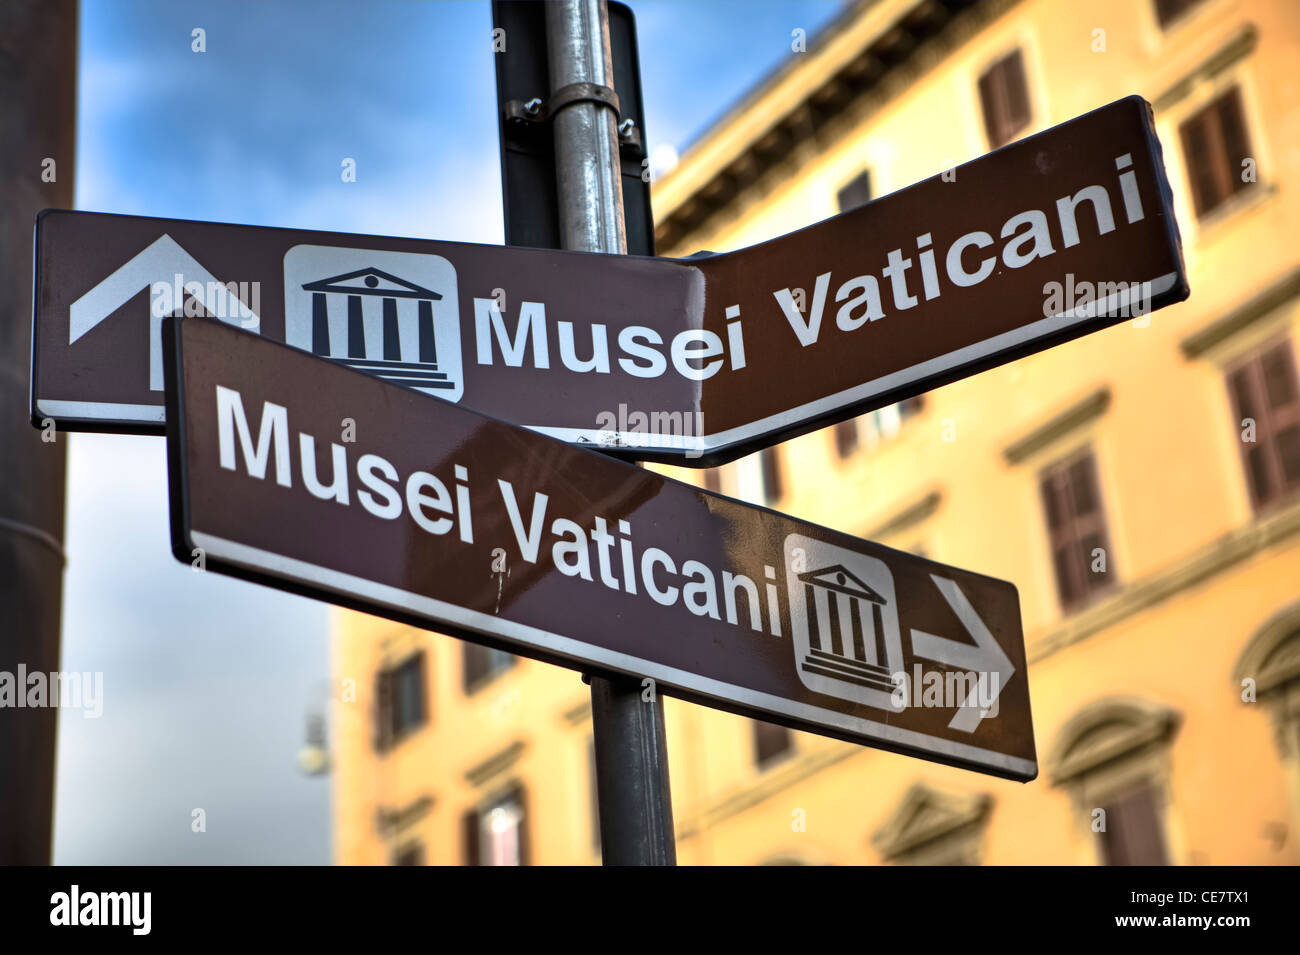 Signalisation confuse à Rome, Latium, Italie Banque D'Images